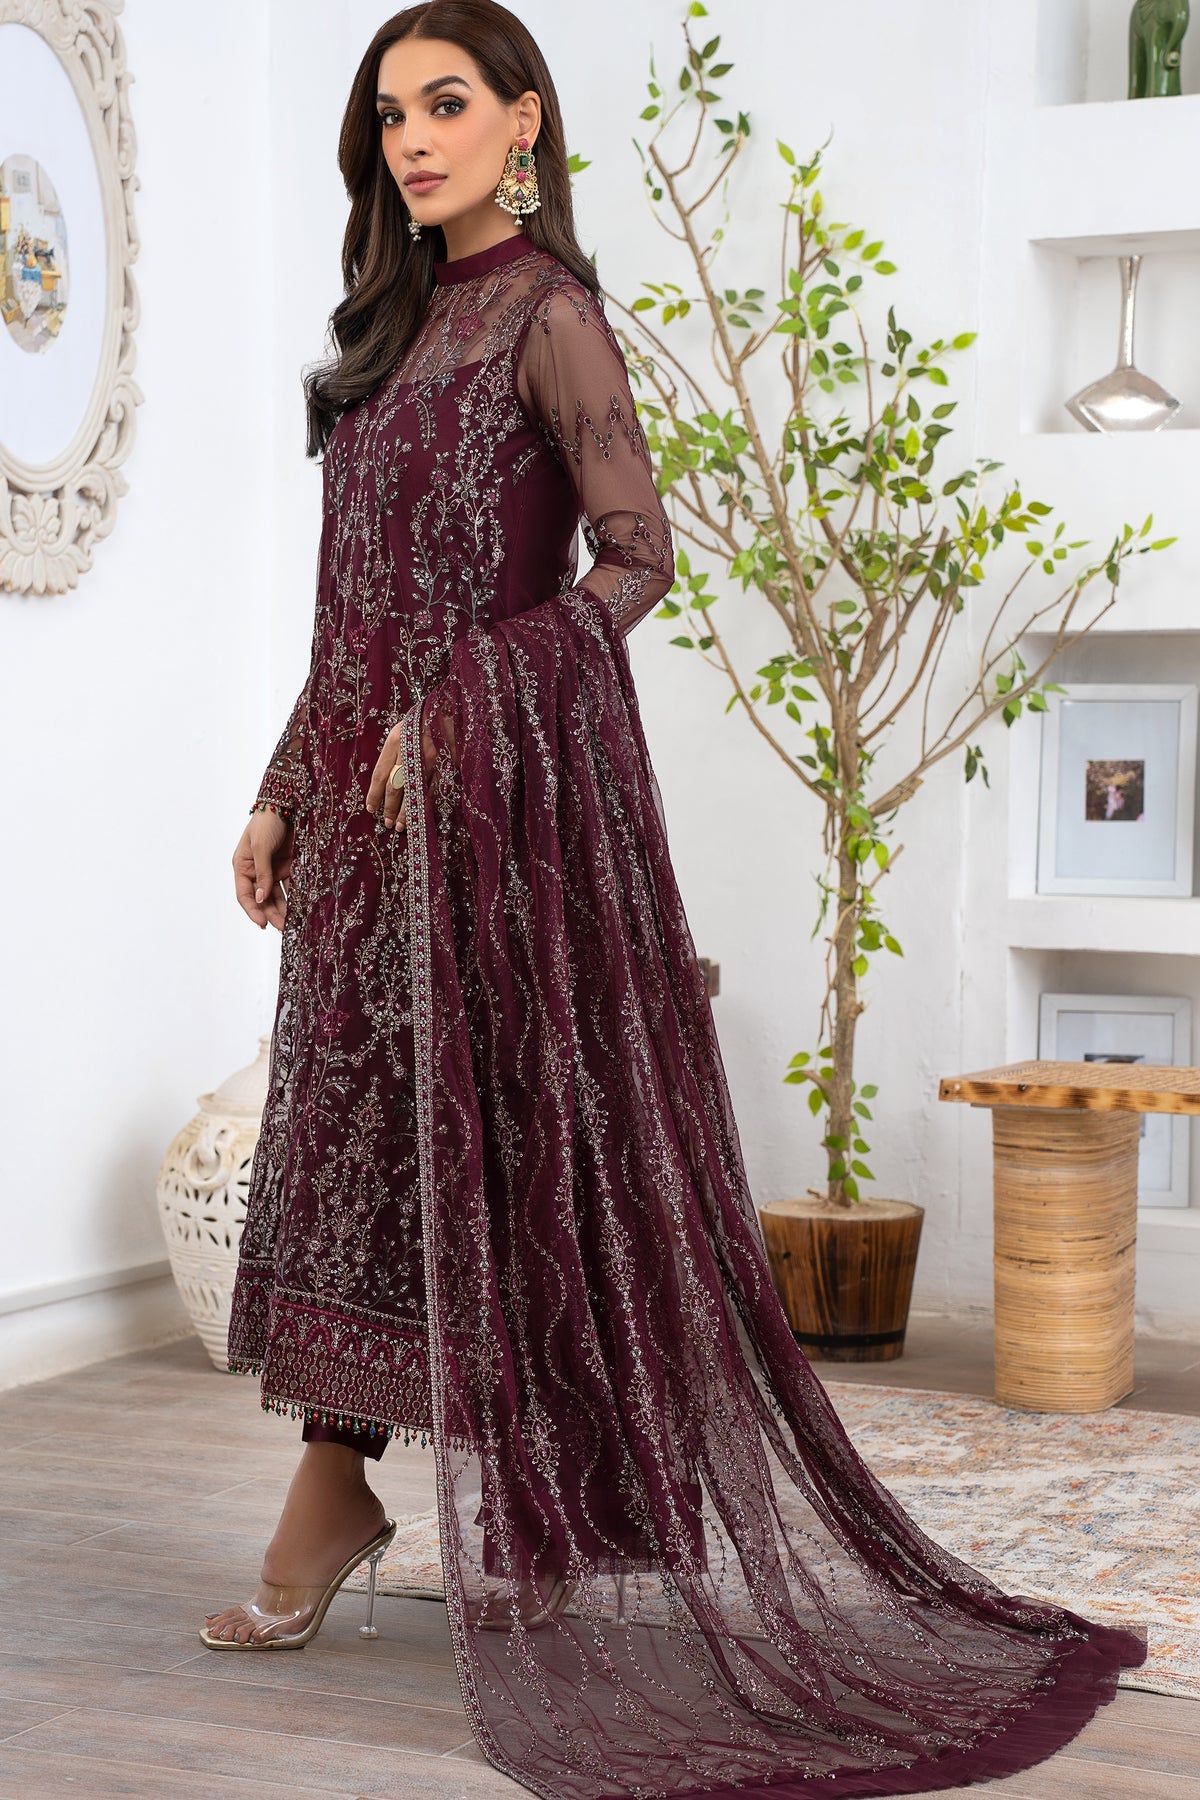 Shop Now, MARIE - ZLM-06 - Meeral Luxury Formals 2023 - Zarif - Shahana Collection UK - Wedding and Bridal Dresses - Pakistani Dresses in UAE - Shahana UK